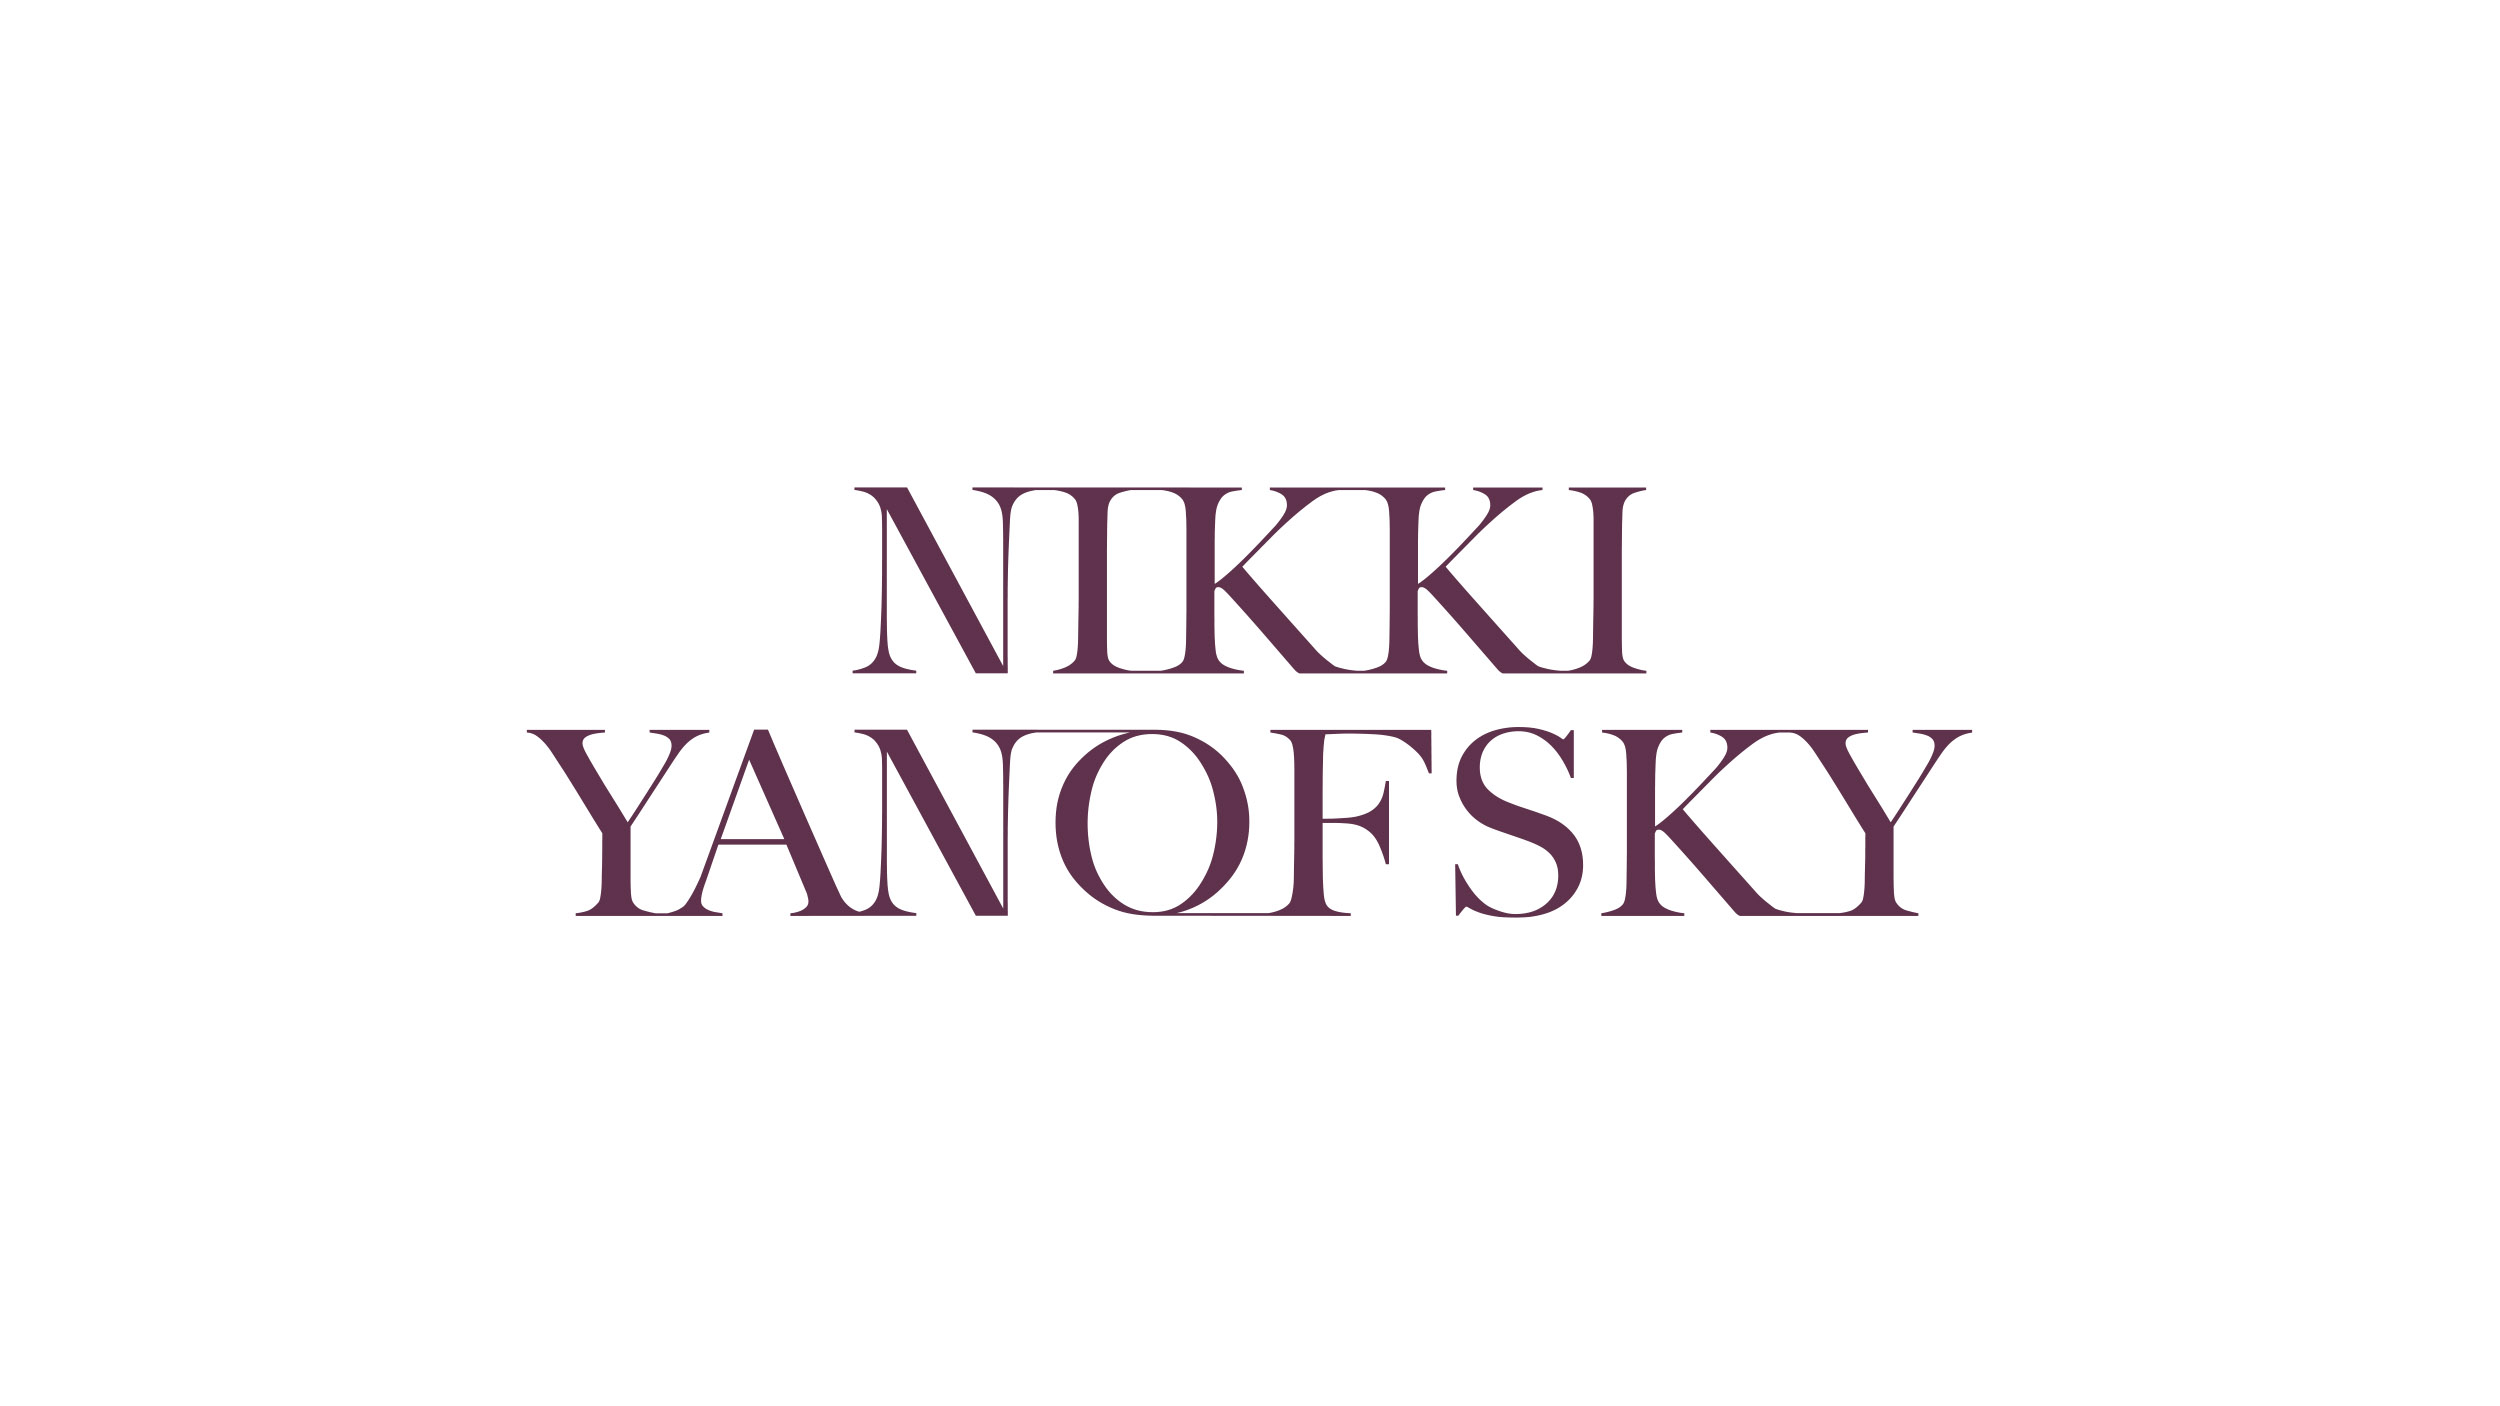 Branding and logotype for the pop artist Nikki Yanofsky.